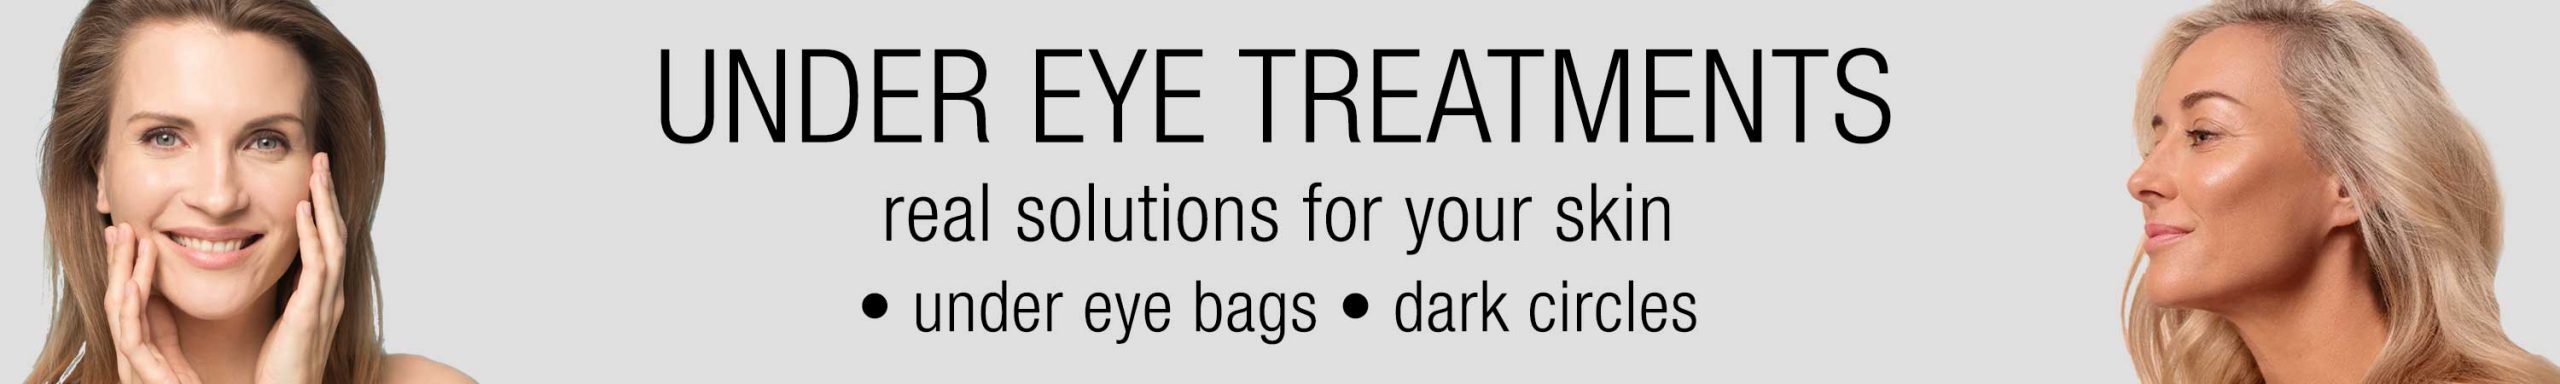 under-eye-treatments-banner